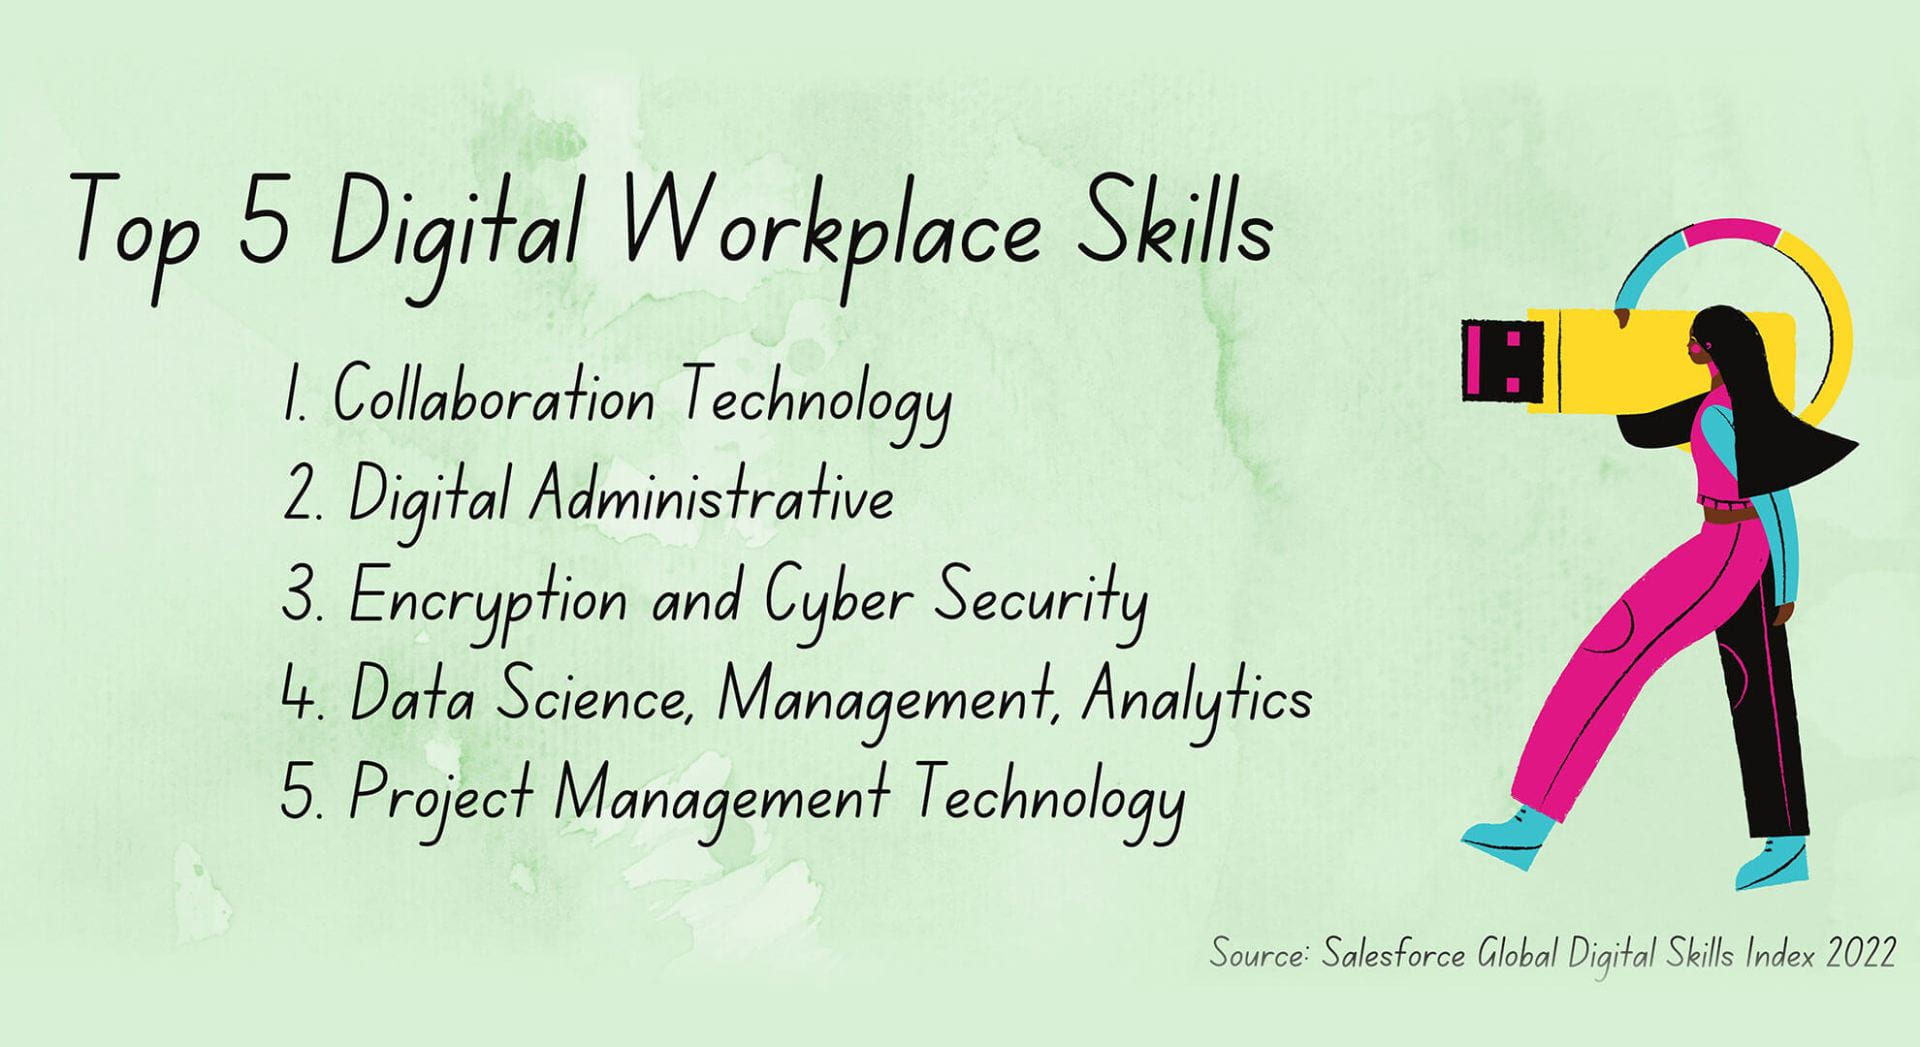 Illustration: Top 5 Digital Workplace Skills